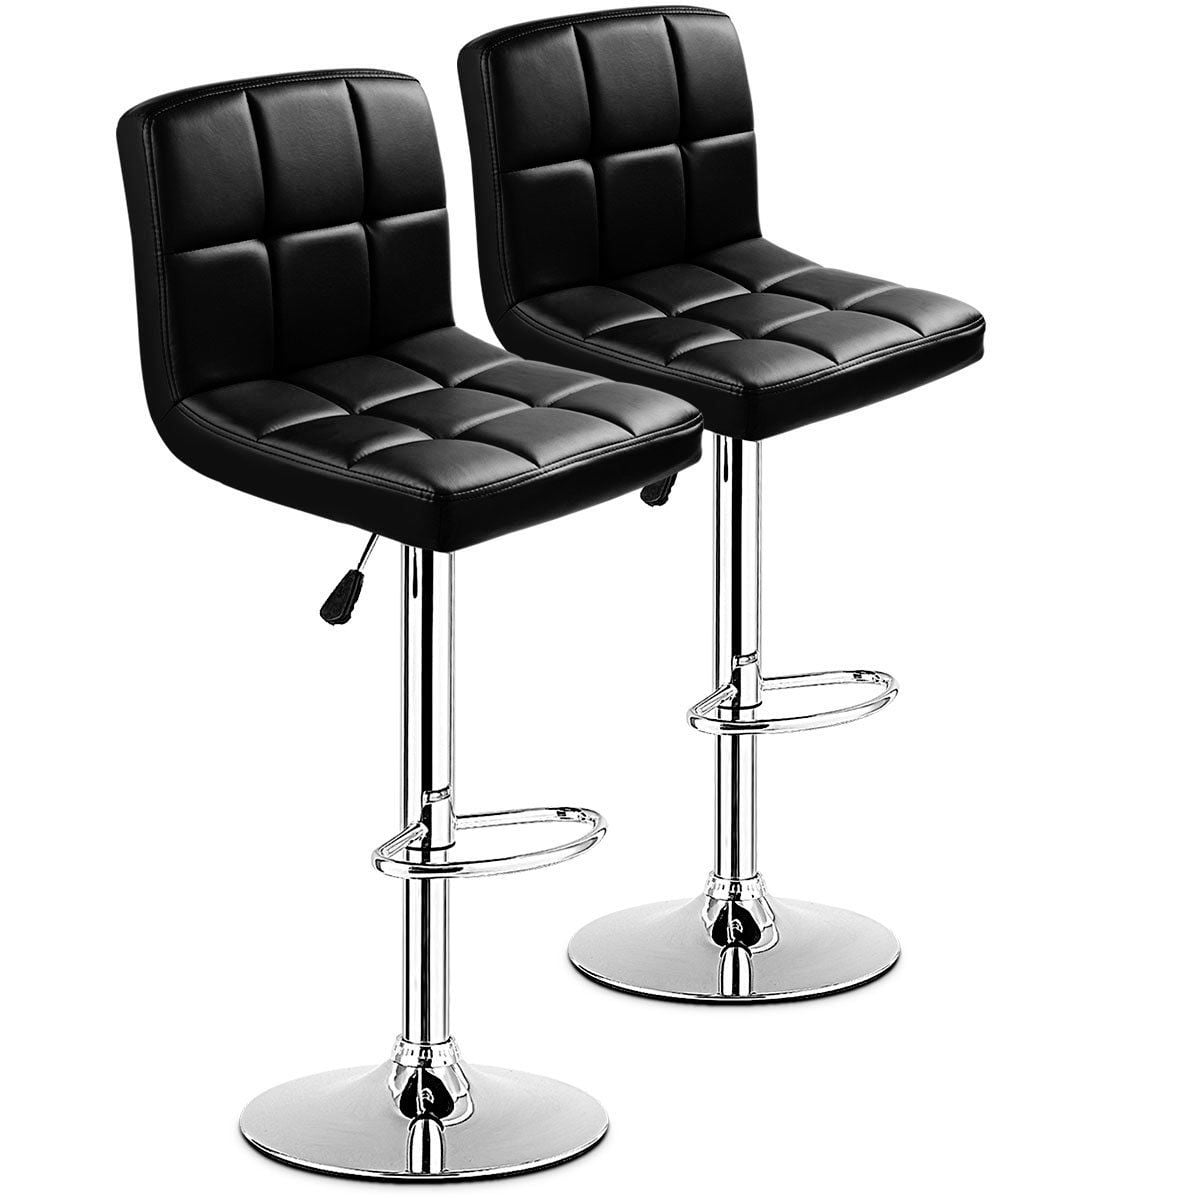 Set of 4 Bar Stools Counter Adjustable Swivel PU Leather Pub Dinning Chair Black 